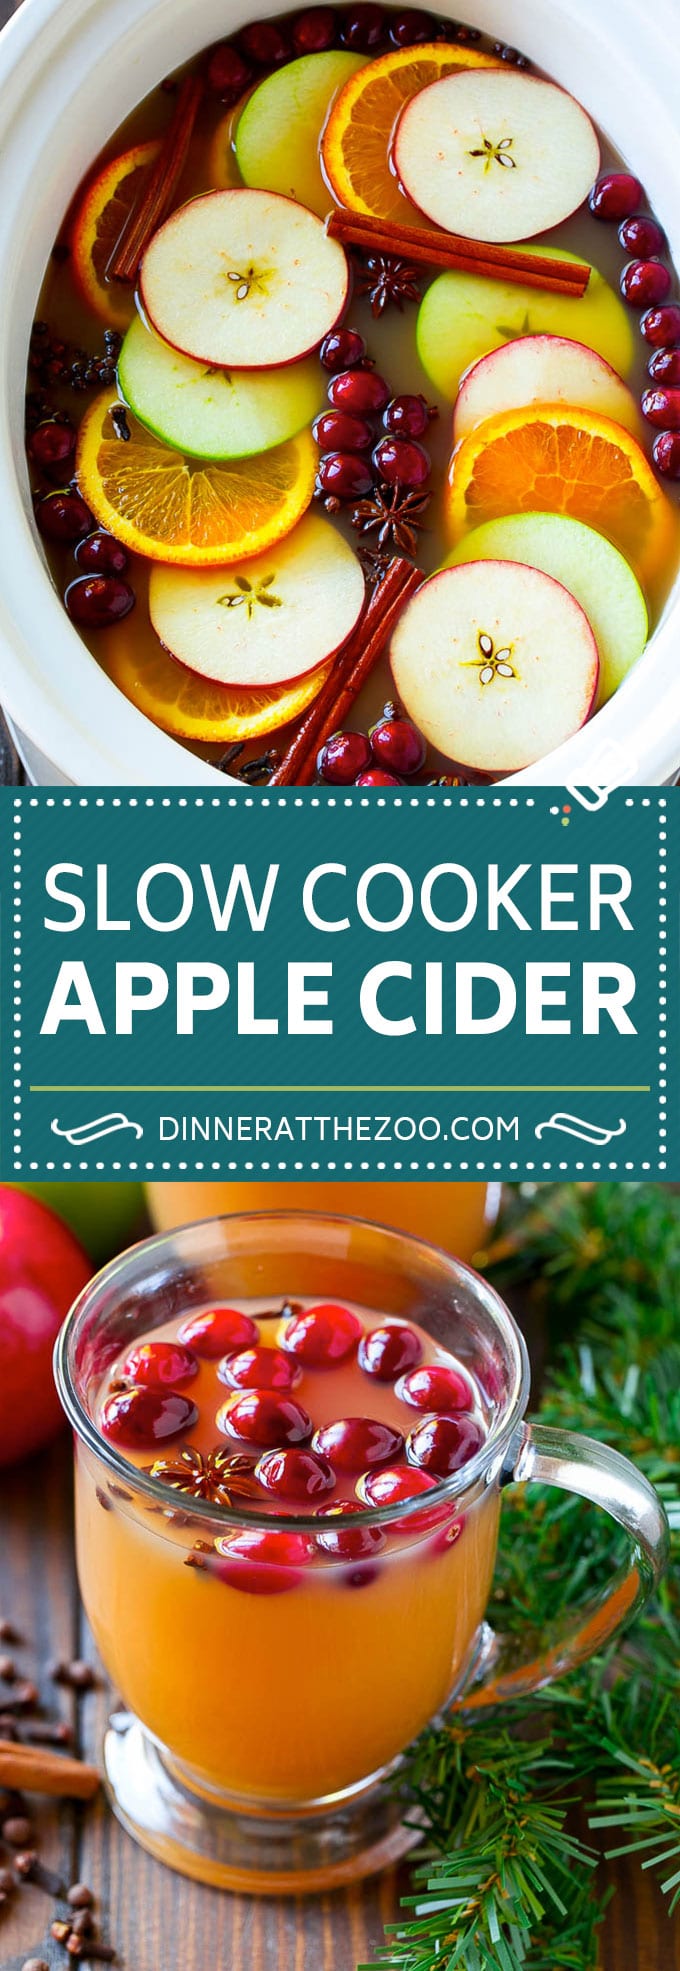 Slow Cooker Apple Cider | Mulled Apple Cider | Crockpot Apple Cider #cider #apple #applecider #drink #crockpot #slowcooker #dinneratthezoo